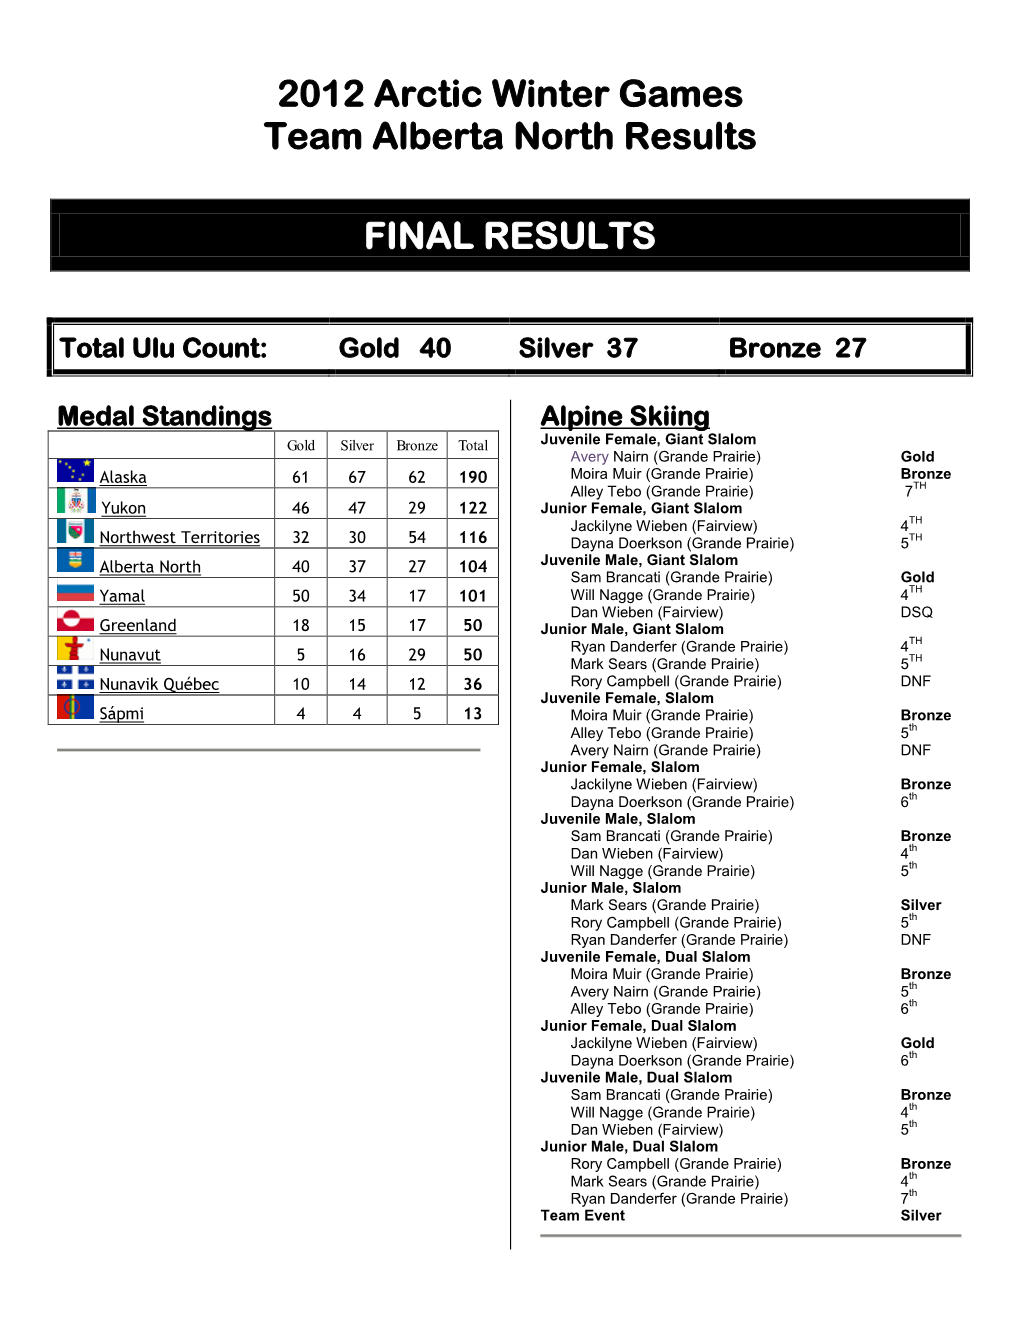 2012 Team Alberta North Final Results